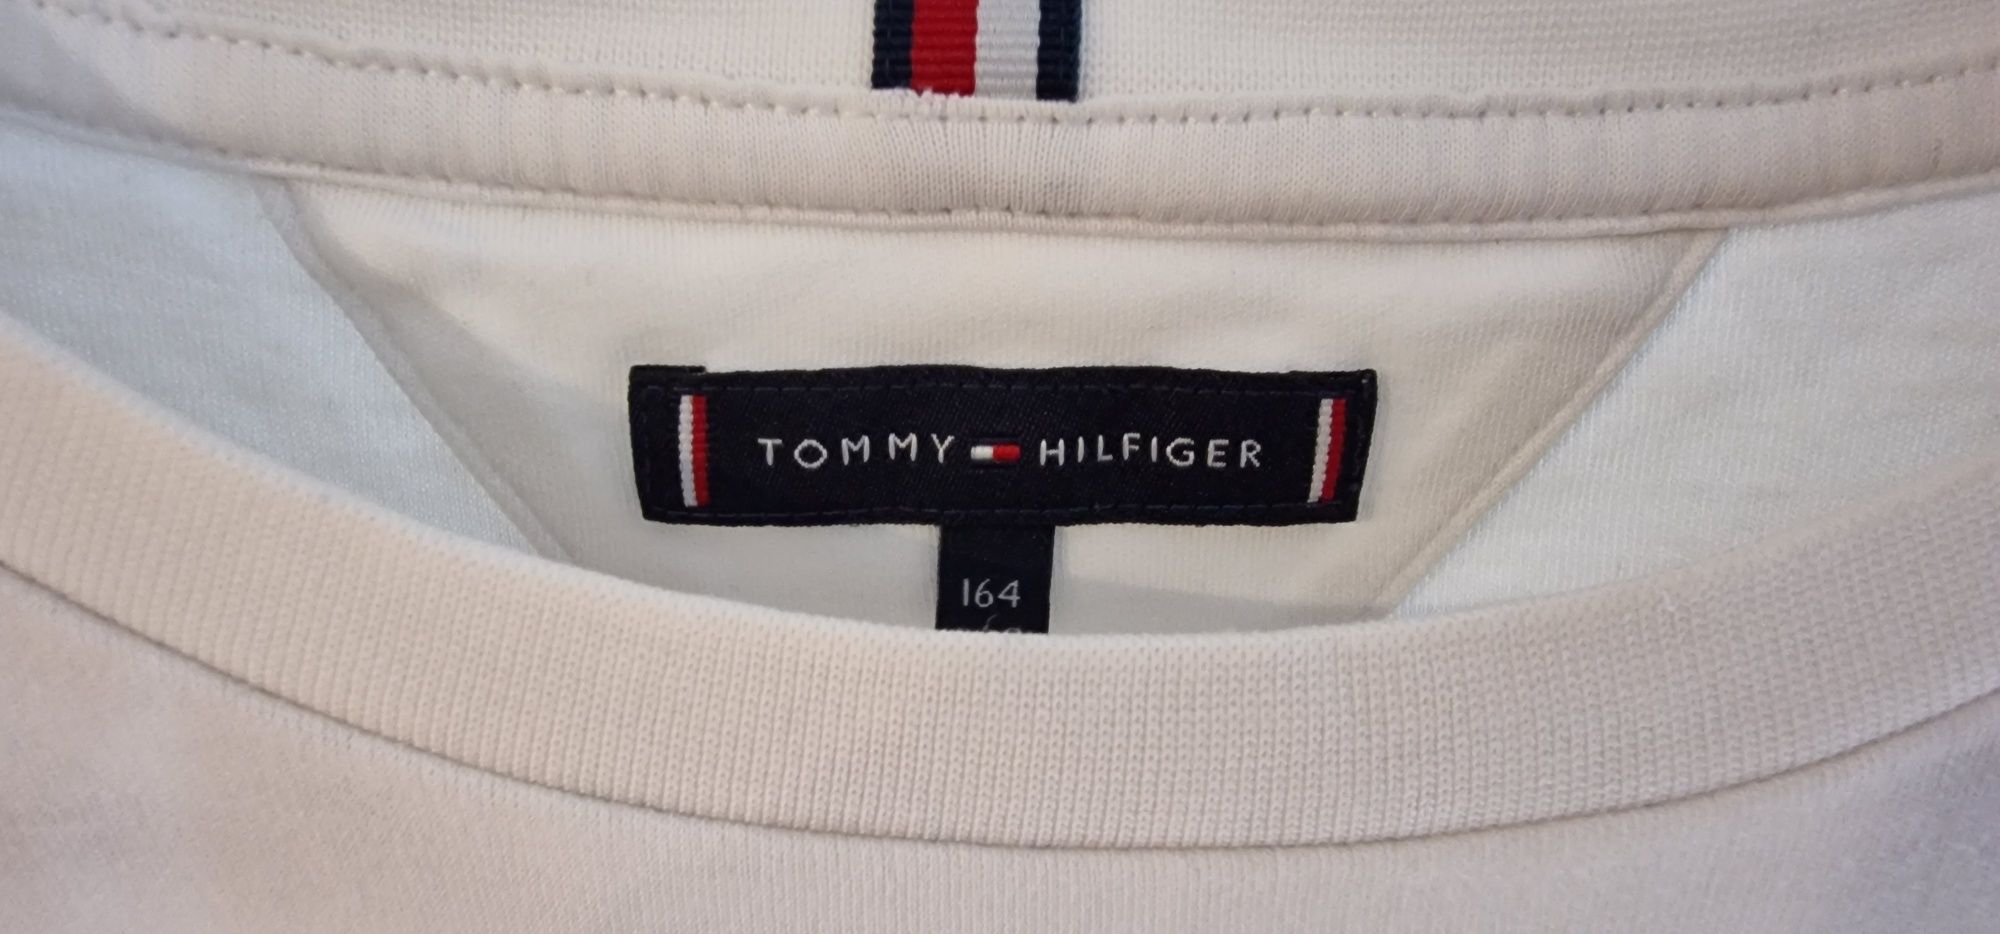 Tea shirt Tommy Hilfiger